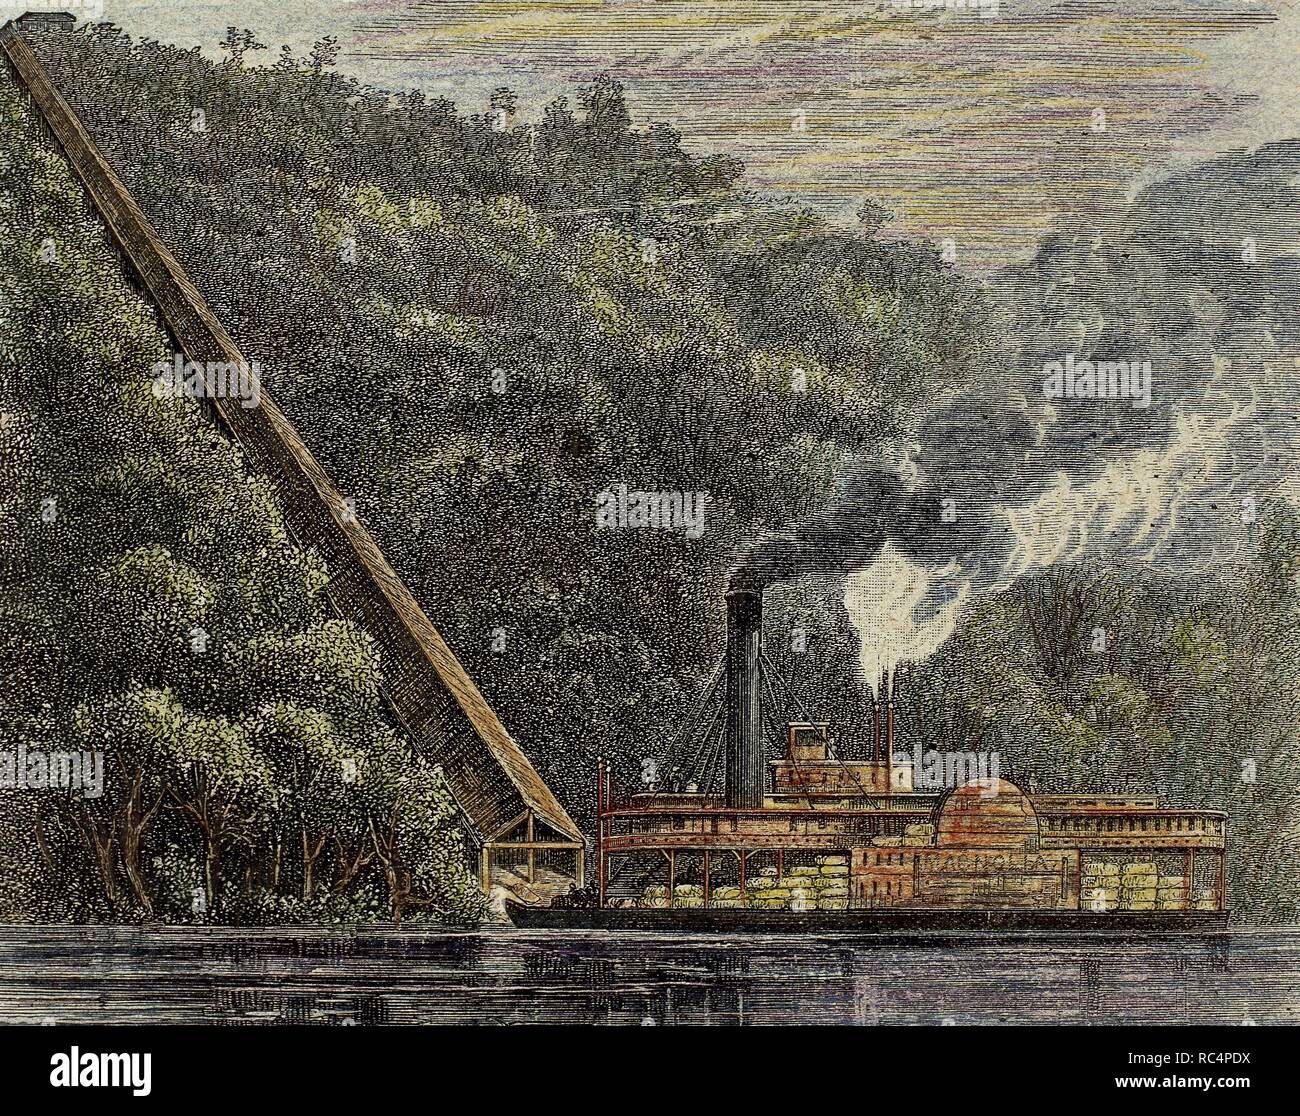 United States. South Carolina. Cotton planting. Steamboat loading up cotton sacks. Colored engraving, 1888. Stock Photo